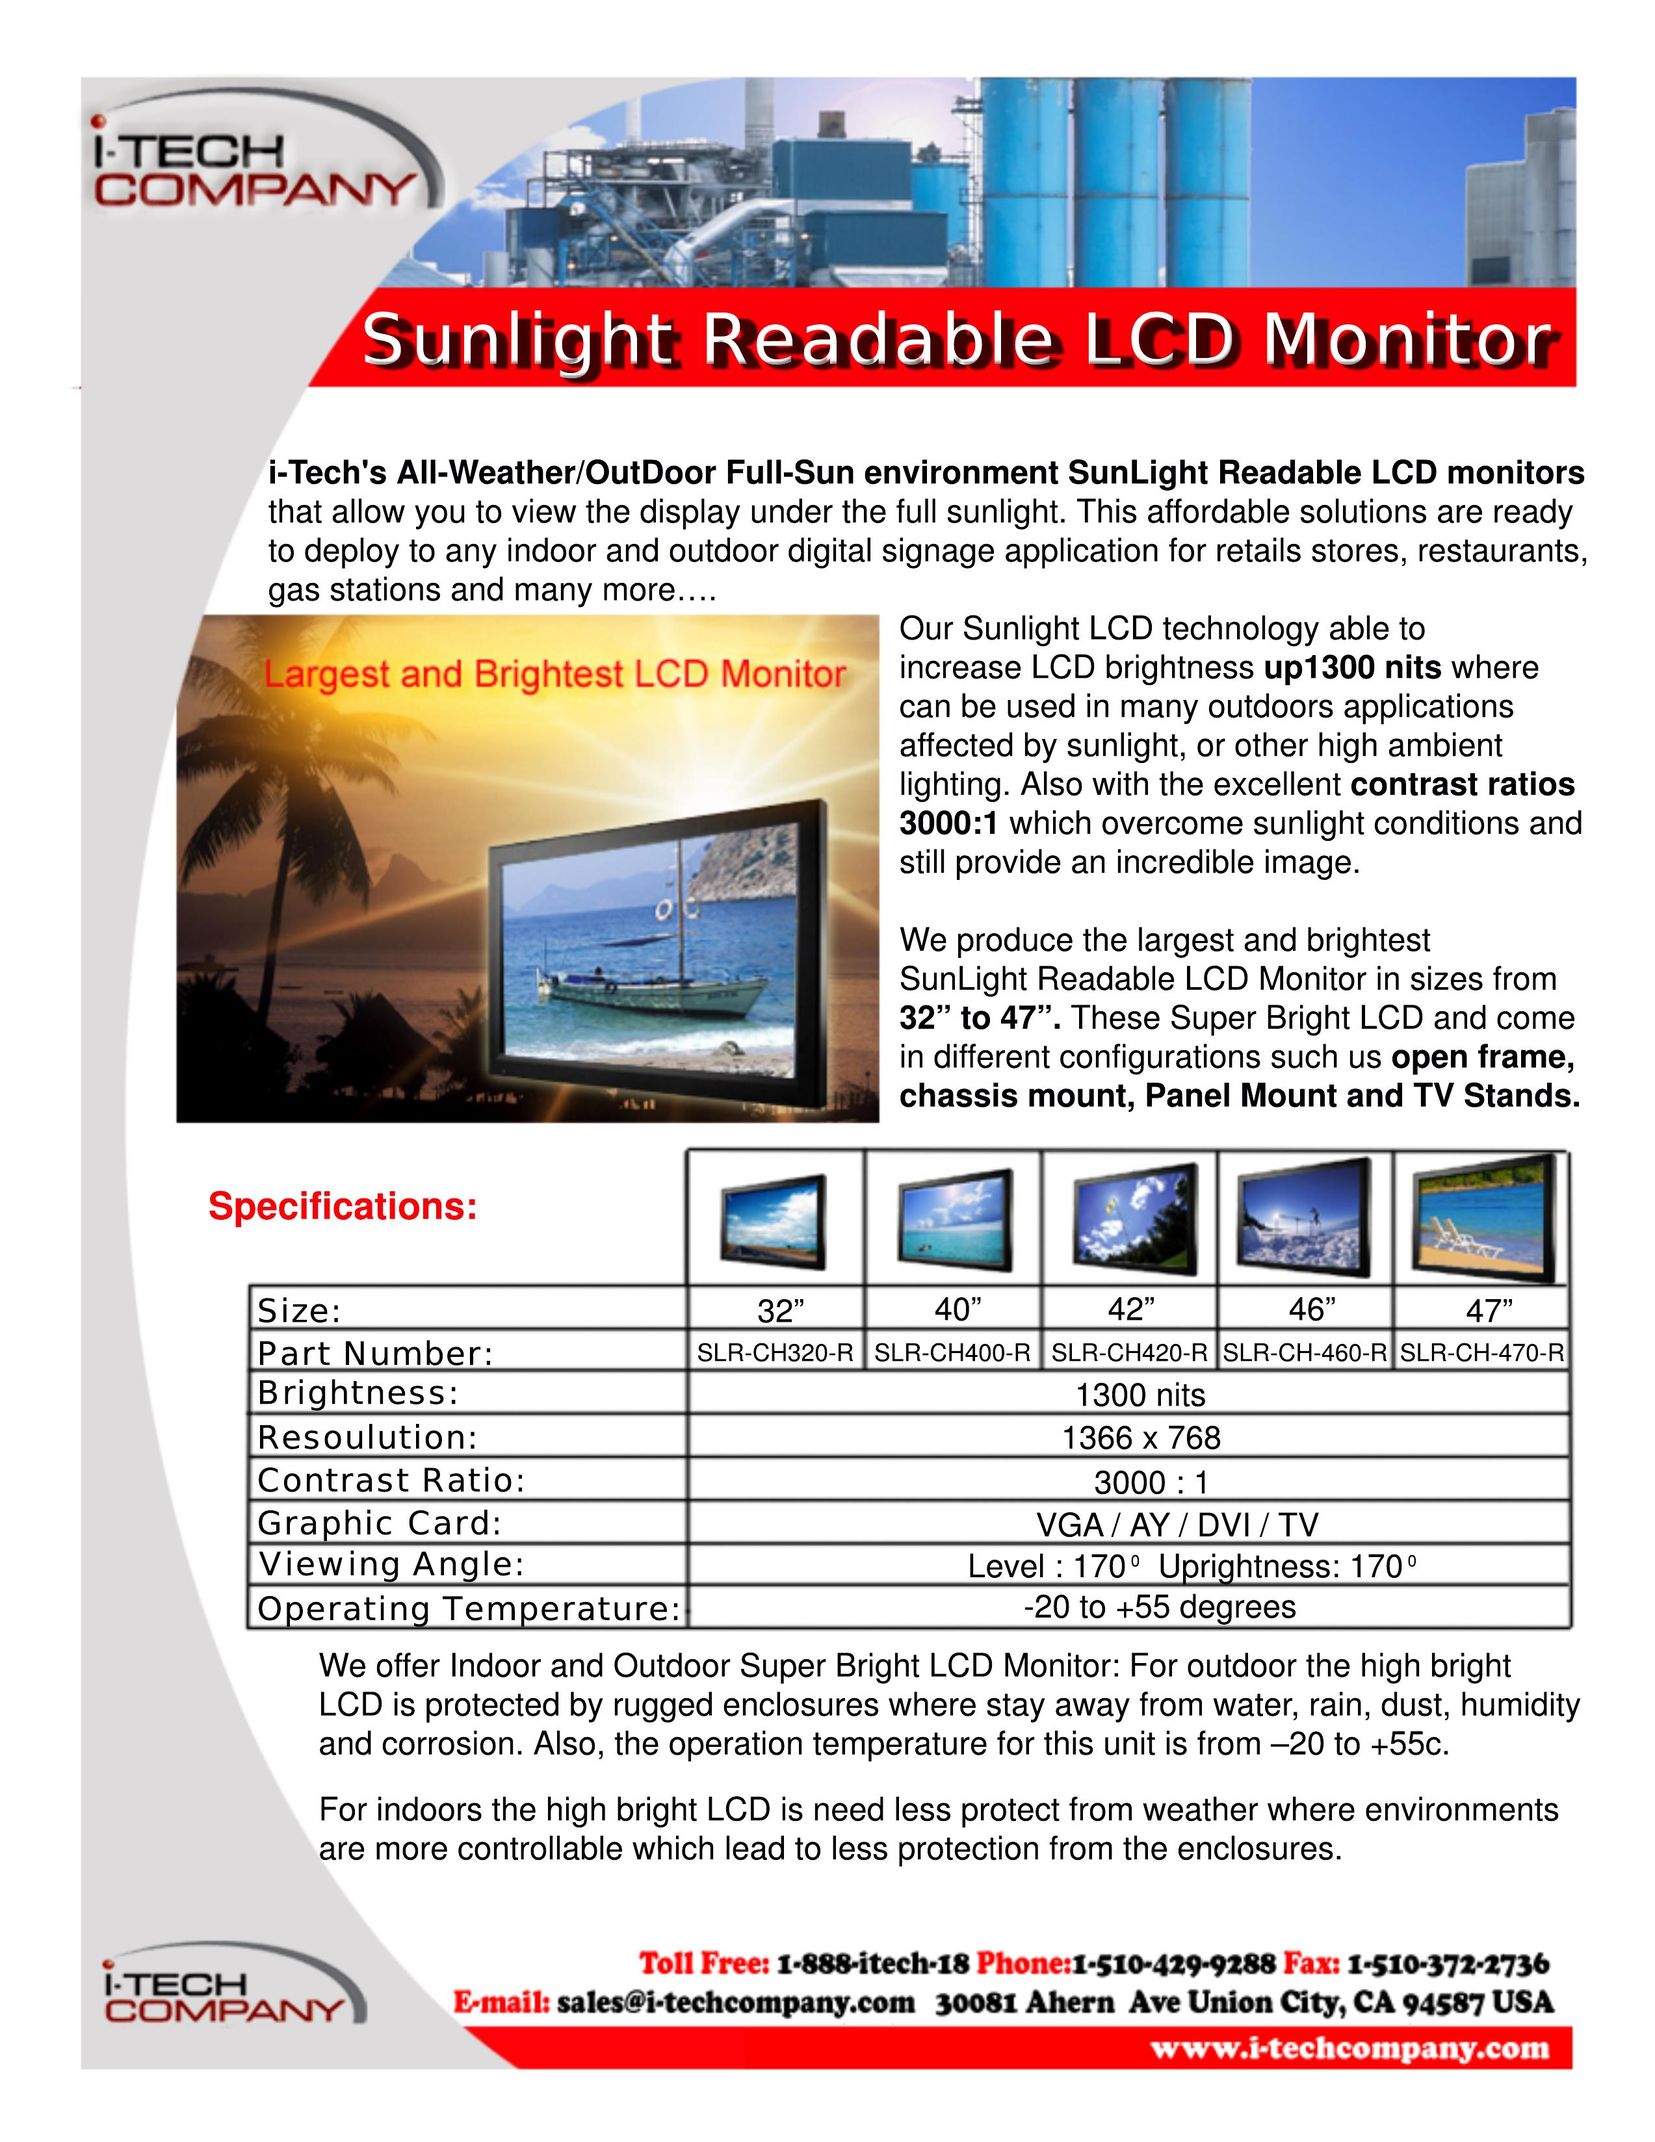 I-Tech Company SLR-CH-470-R Computer Monitor User Manual